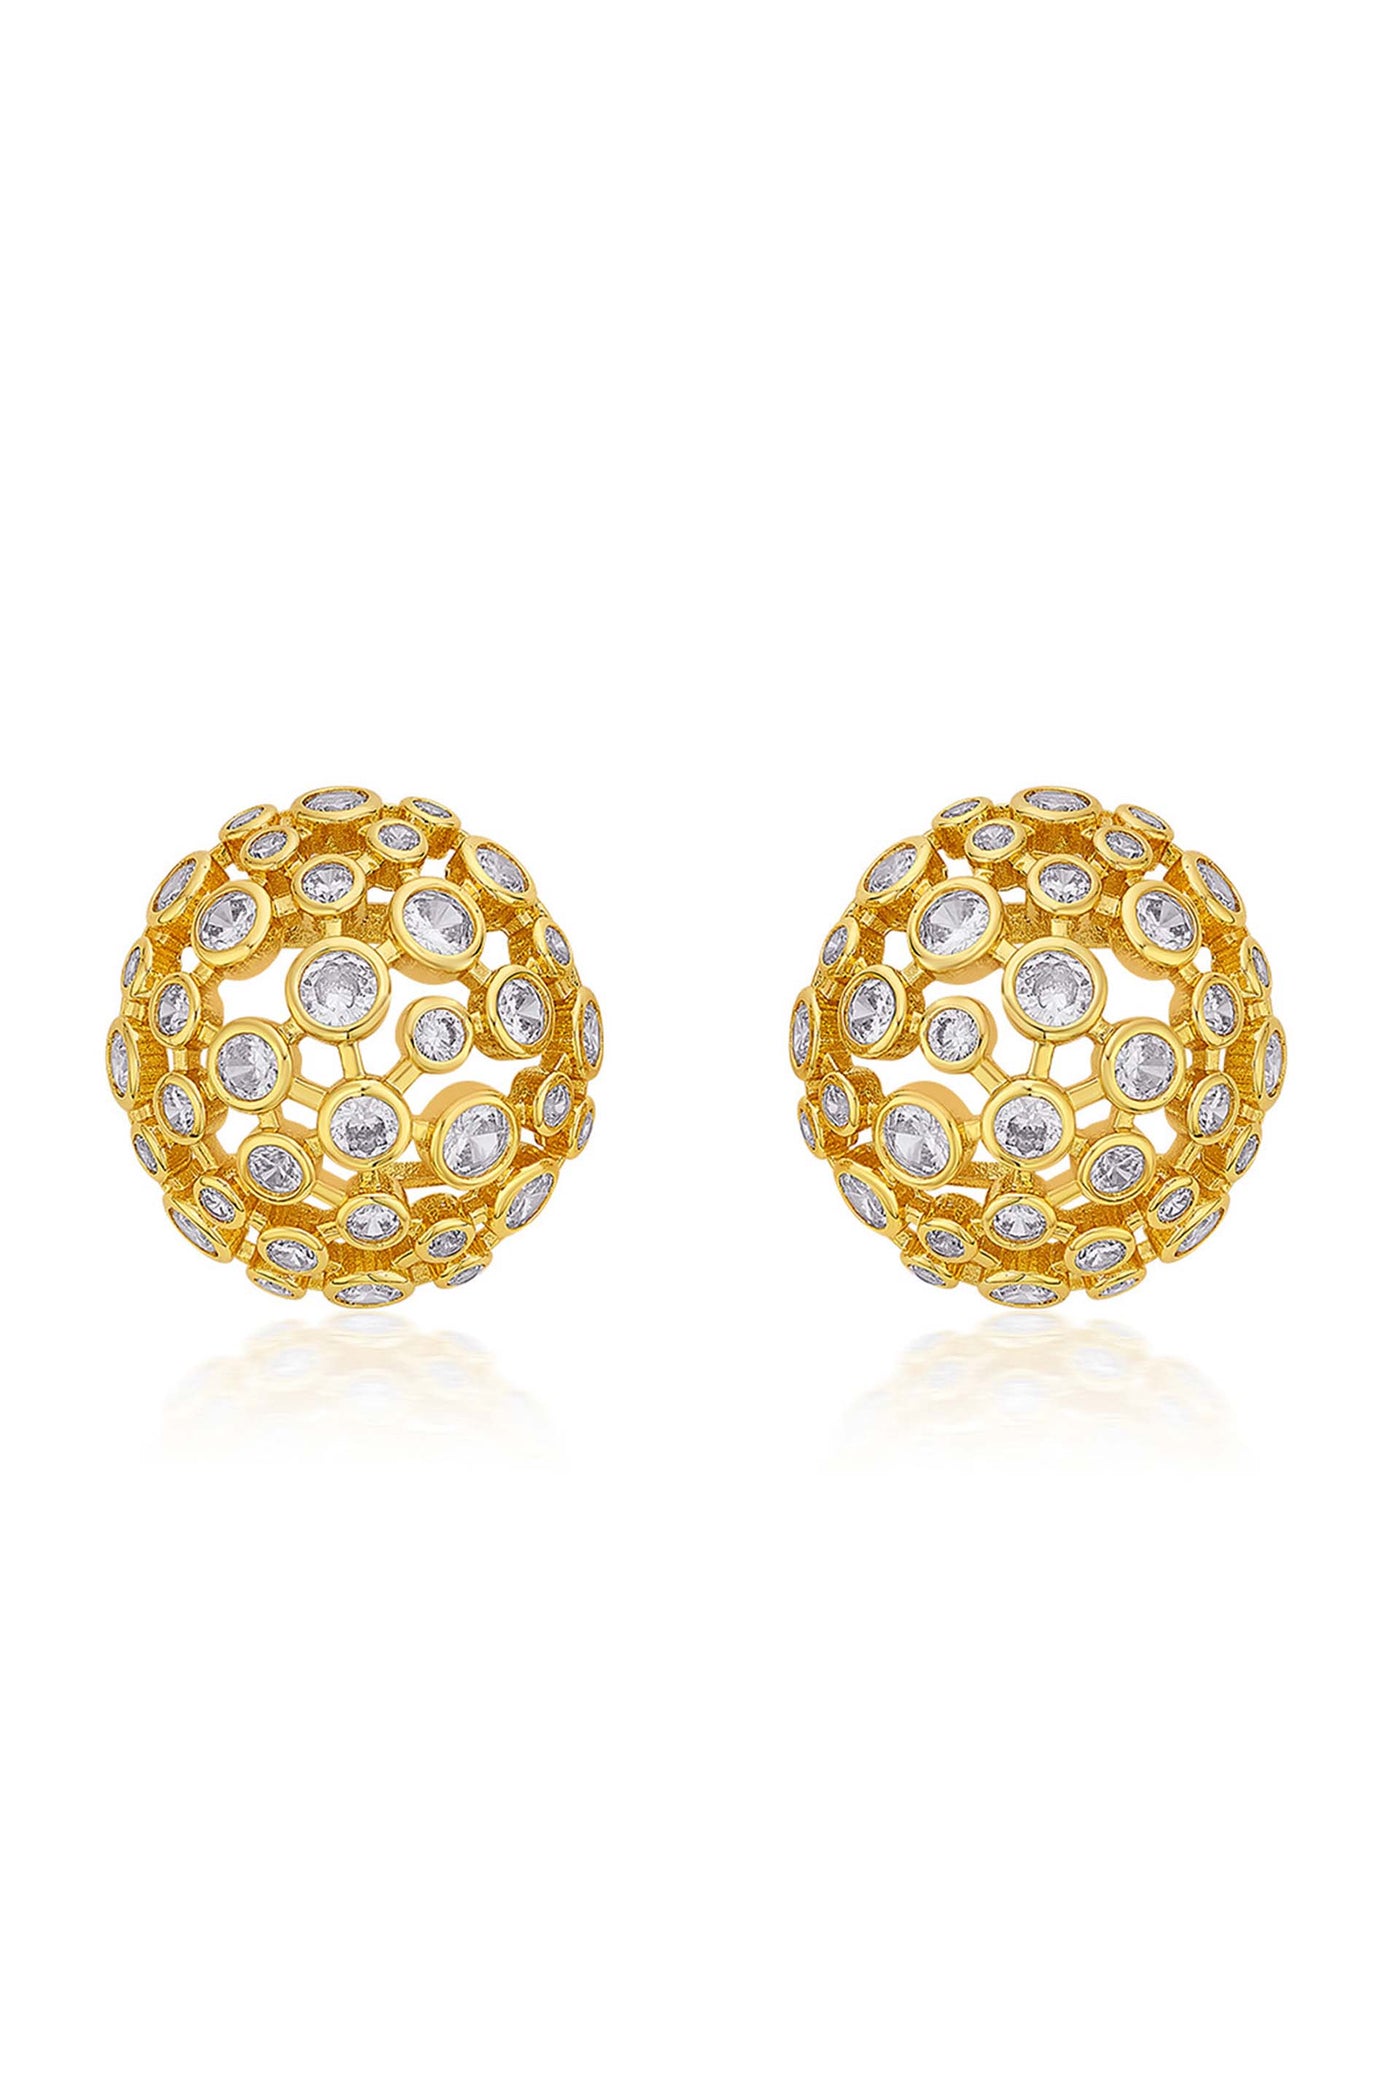 Isharya Aura Gold Mesh Stud Earrings In 18kt Gold Plated fashion jewellery online shopping melange singapore indian designer wear